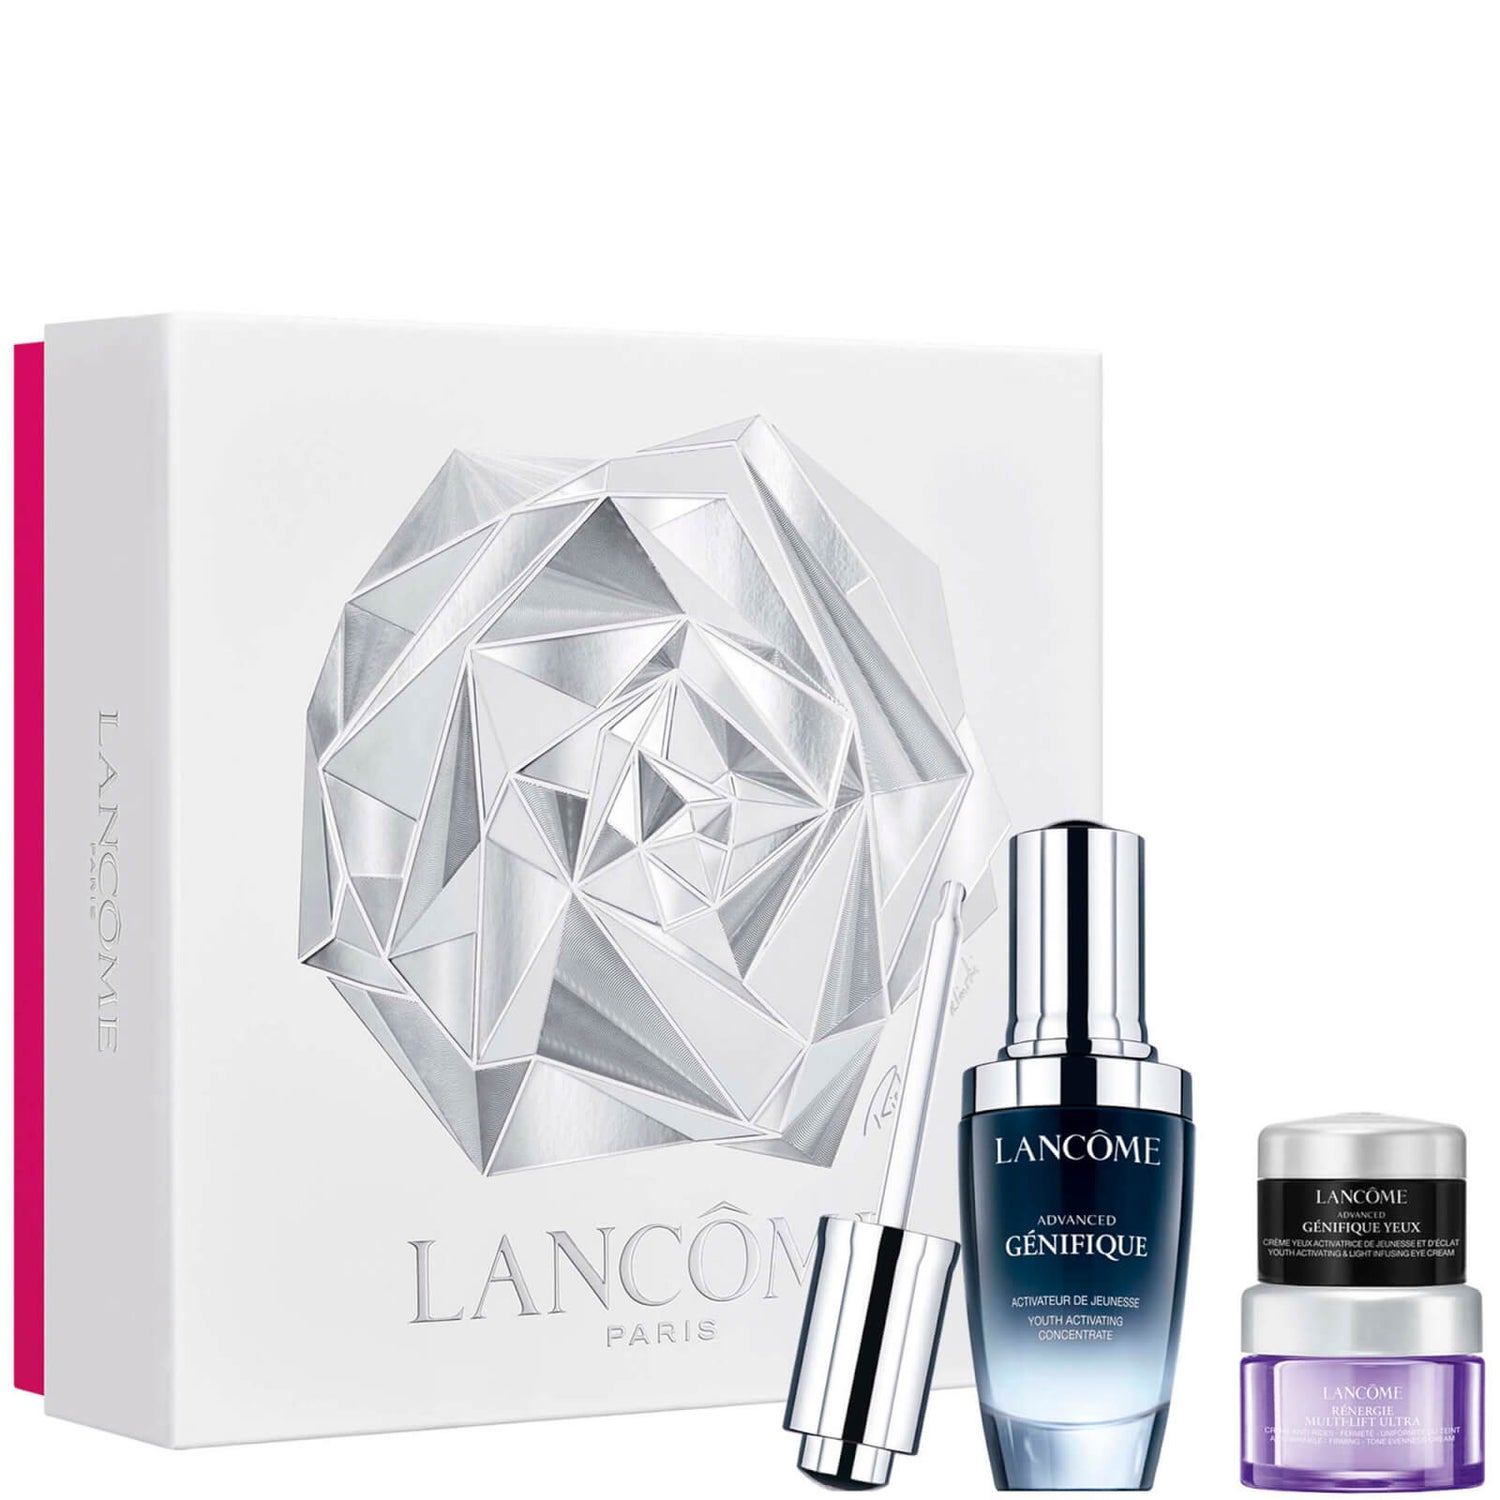 Lancôme Advanced Génifique Serum Holiday Skincare Gift Set For Her (Worth £98.00)